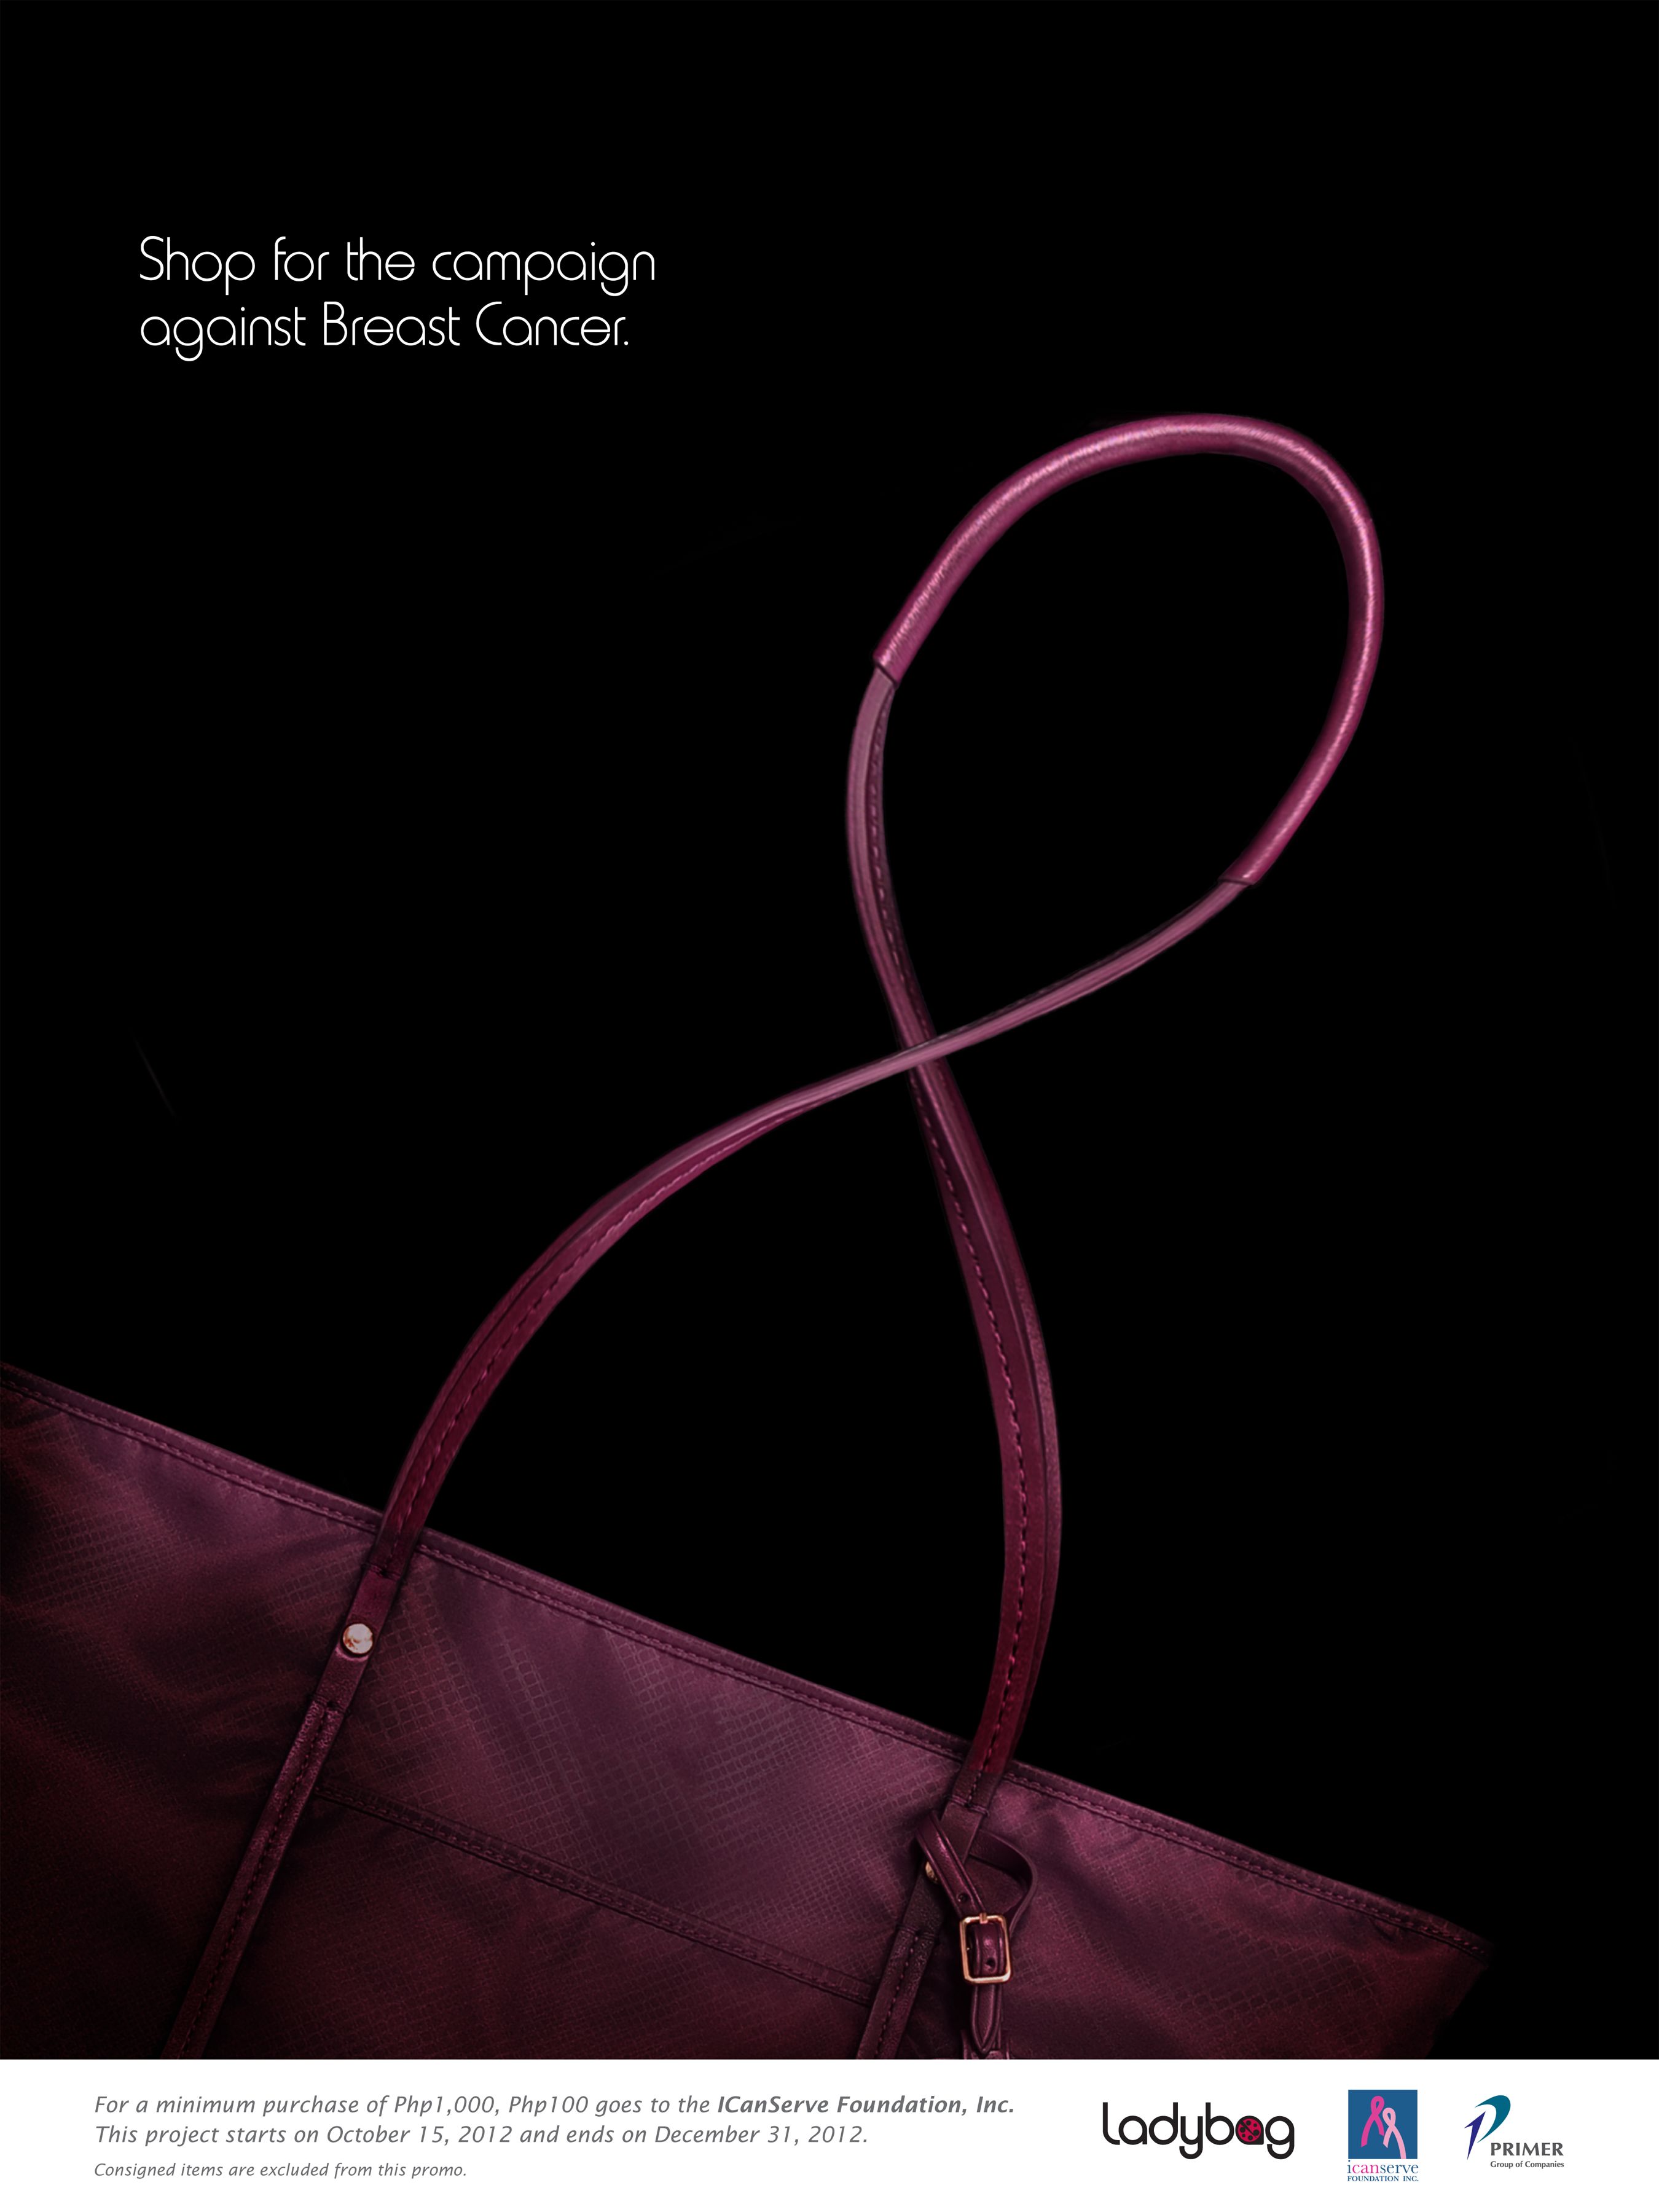 Ladybag for ICanServe (October 15 to December 31, 2012)